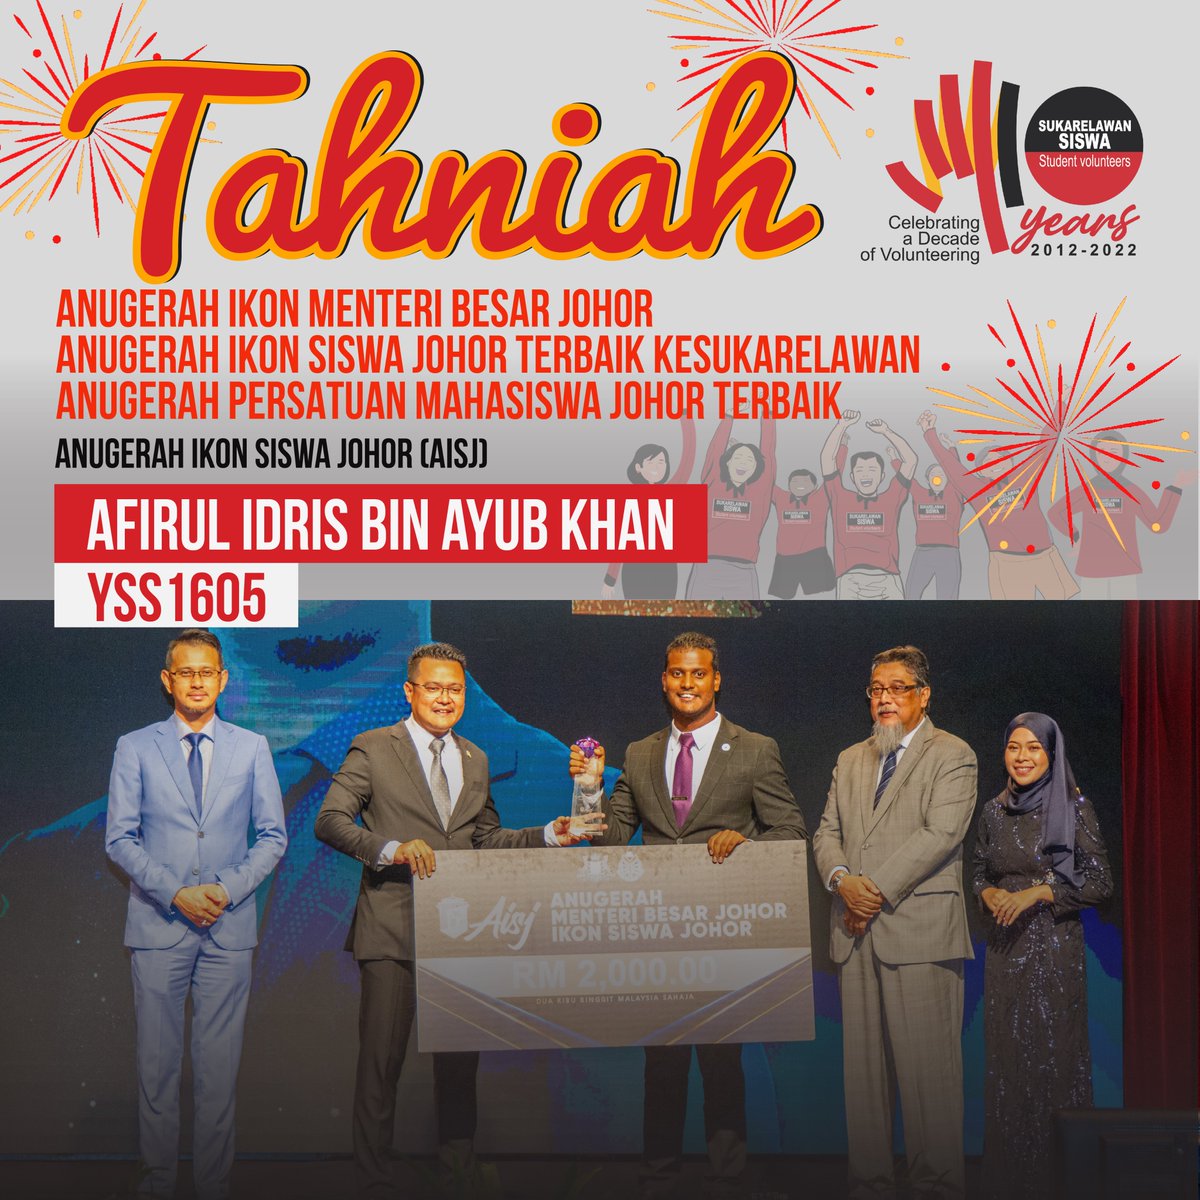 Tahniah!! #YSSAlumni_USM #YSS1605 AFIRUL IDRIS BIN AYUB KHAN diatas Anugerah berikut.

Anugerah telah disampaikan pada Anugerah Ikon Siswa Johor (AISJ). 

@USMOfficial1969 @BhepaUSM